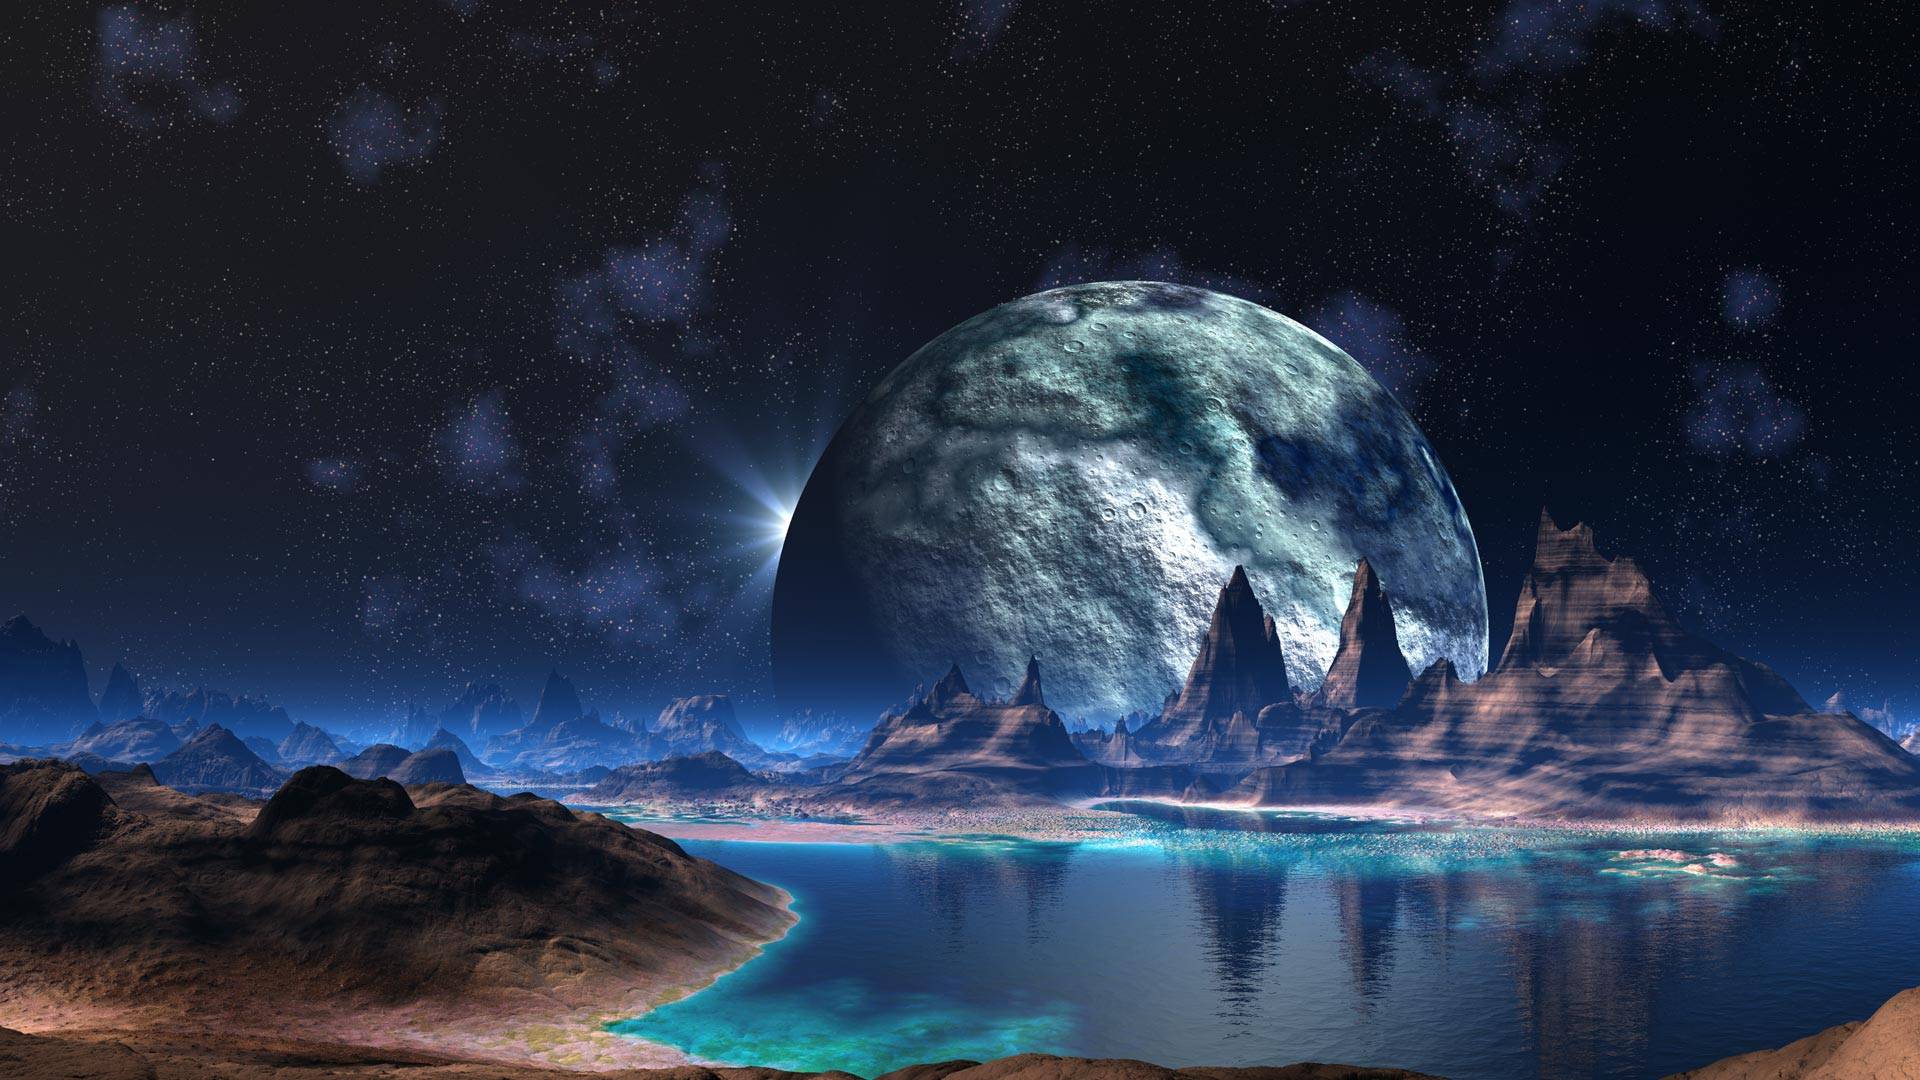 alien landscape planet stars lake sci fi space reflection mountains